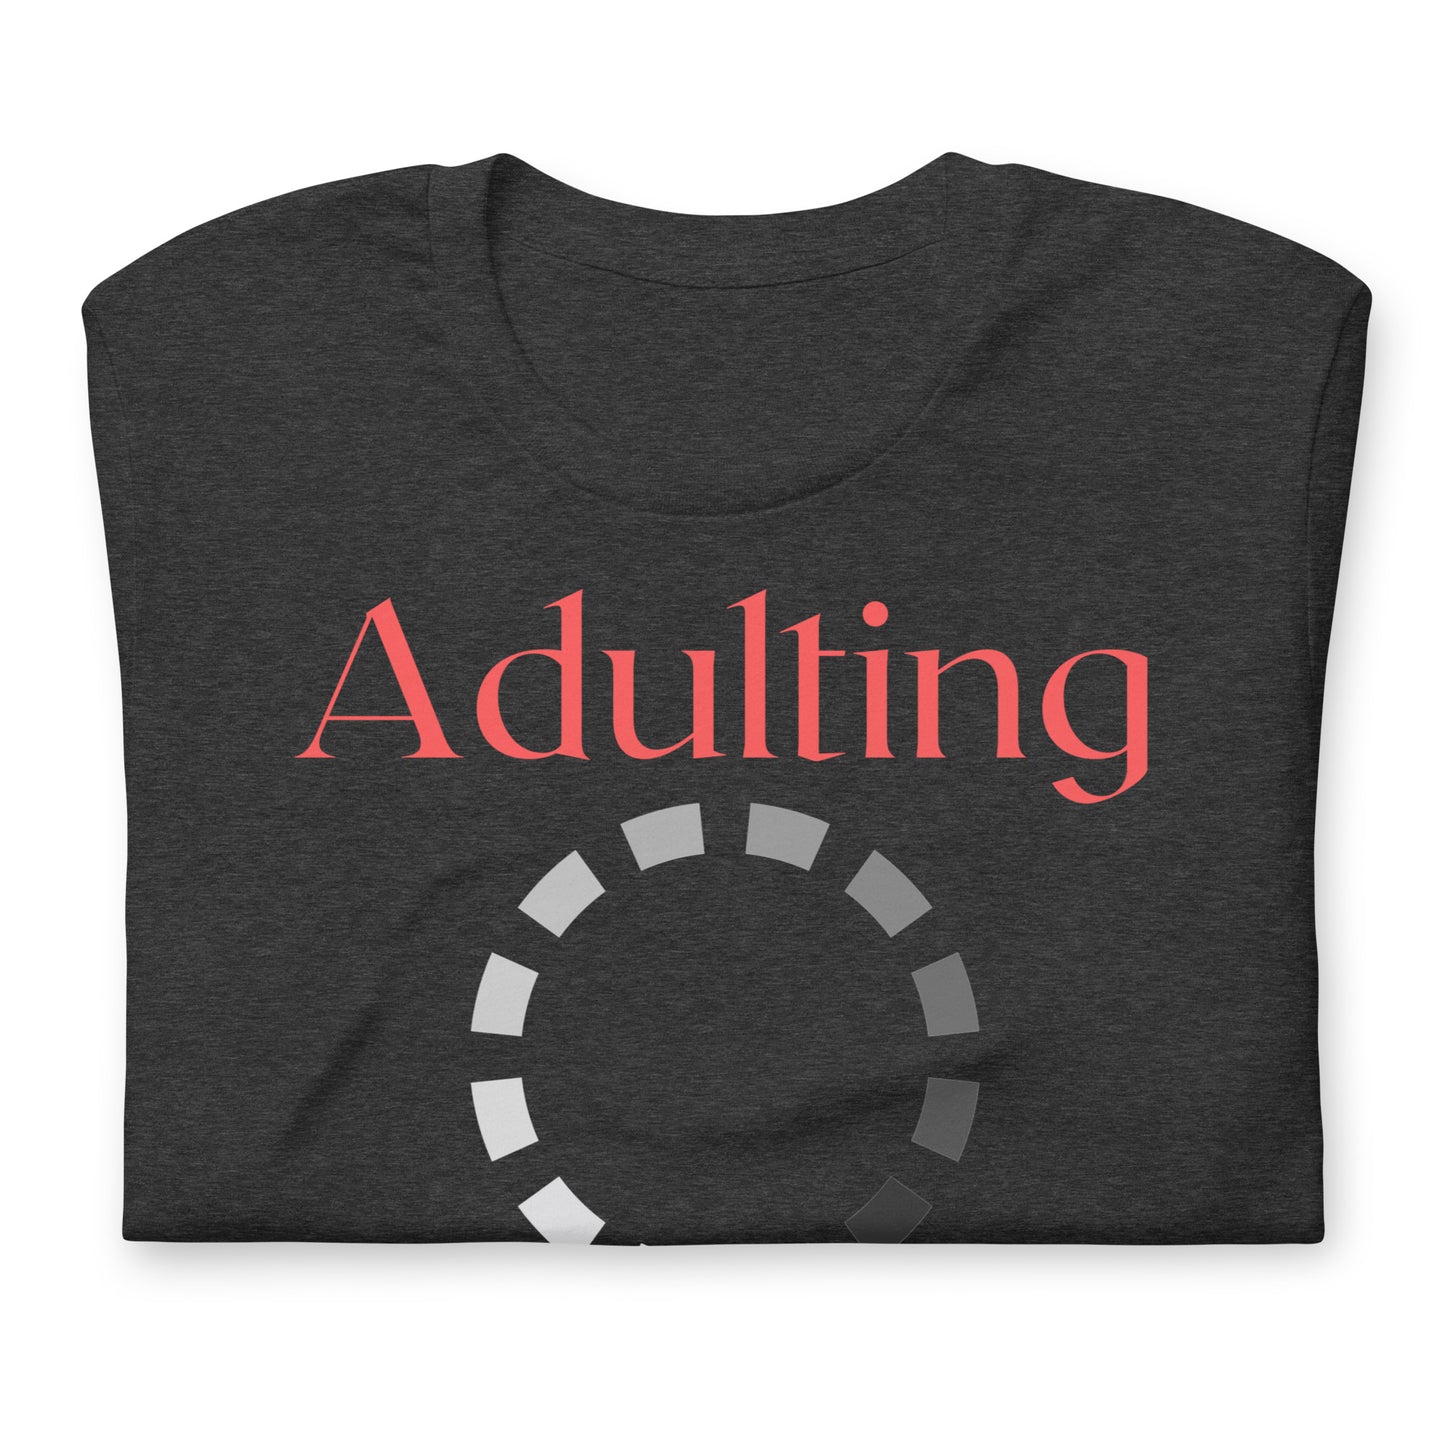 Adulting, Please Wait Quality Cotton Bella Canvas Adult T-Shirt